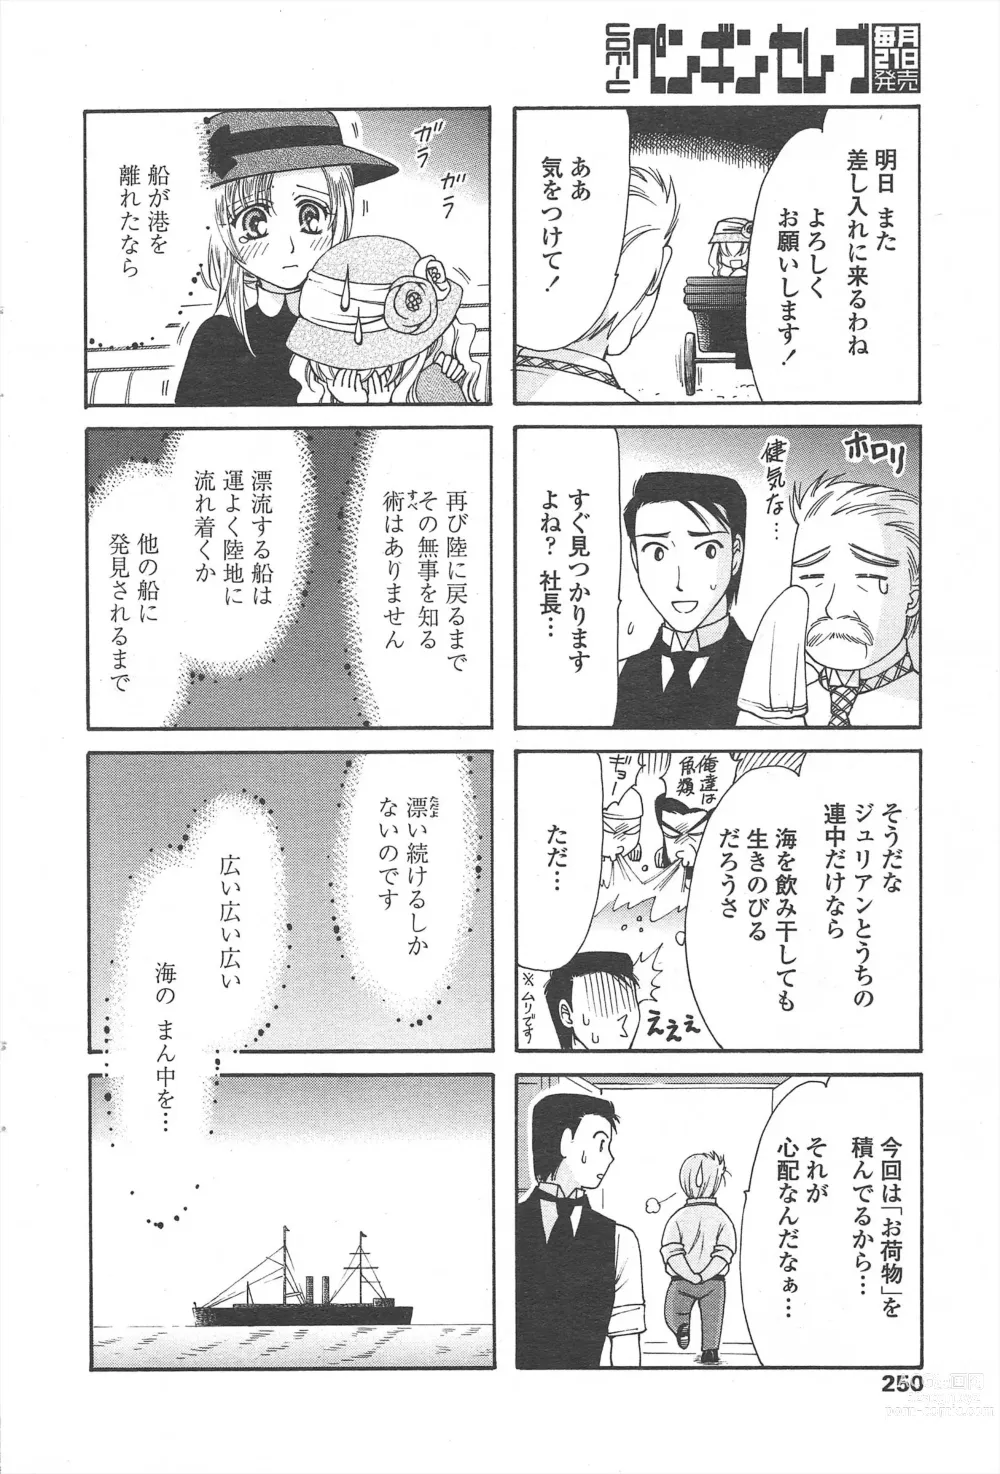 Page 252 of manga COMIC Penguin Celeb 2010-12